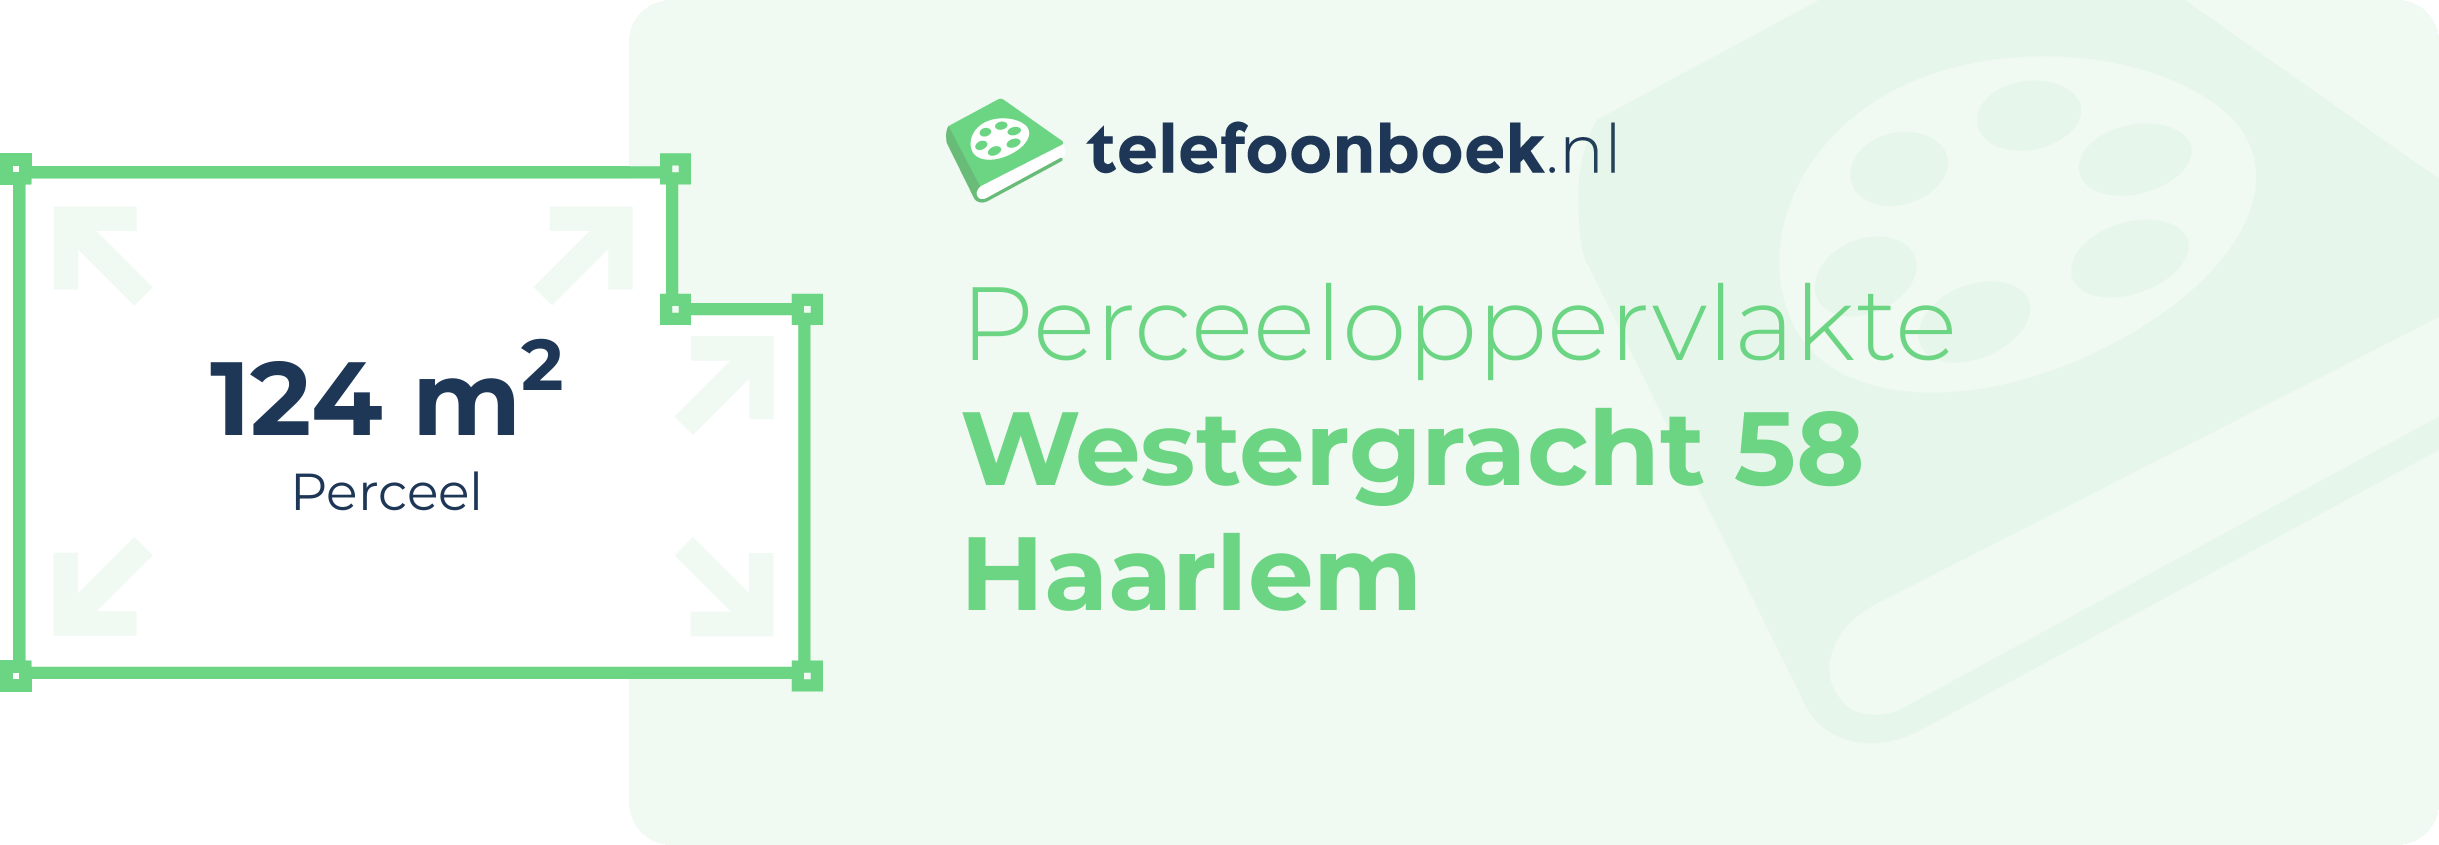 Perceeloppervlakte Westergracht 58 Haarlem